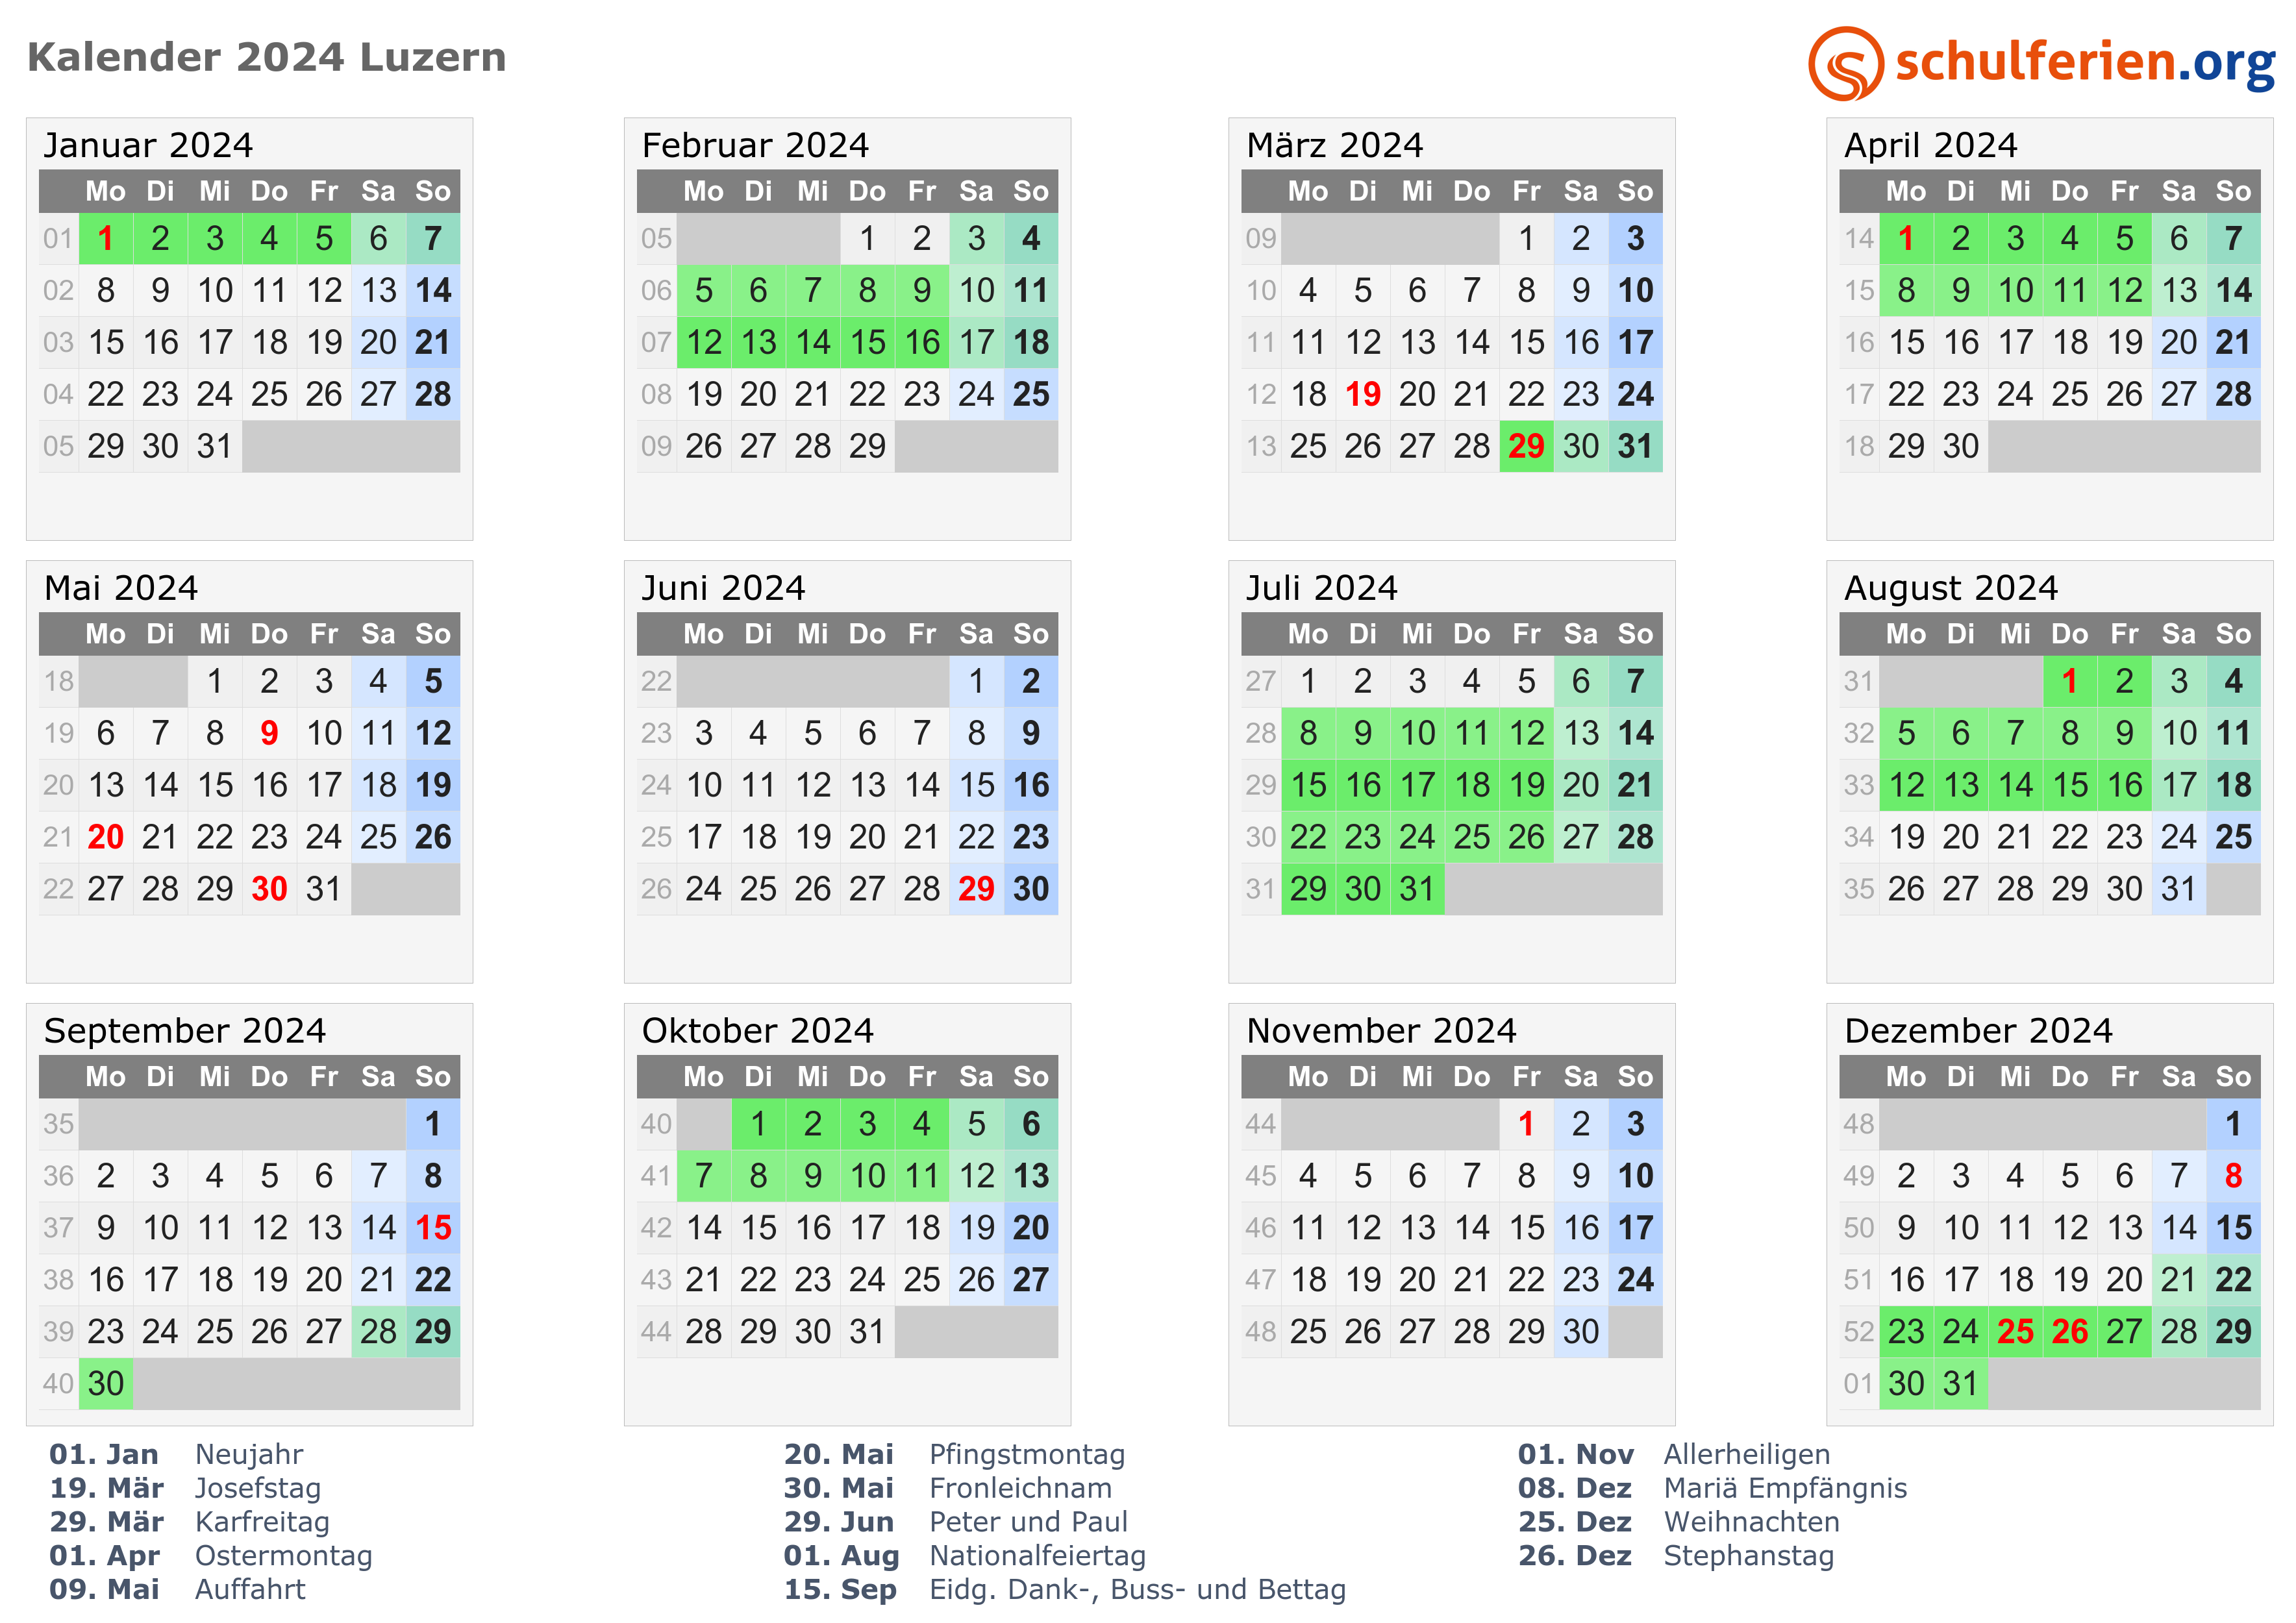 Kalender 2024 Luzern